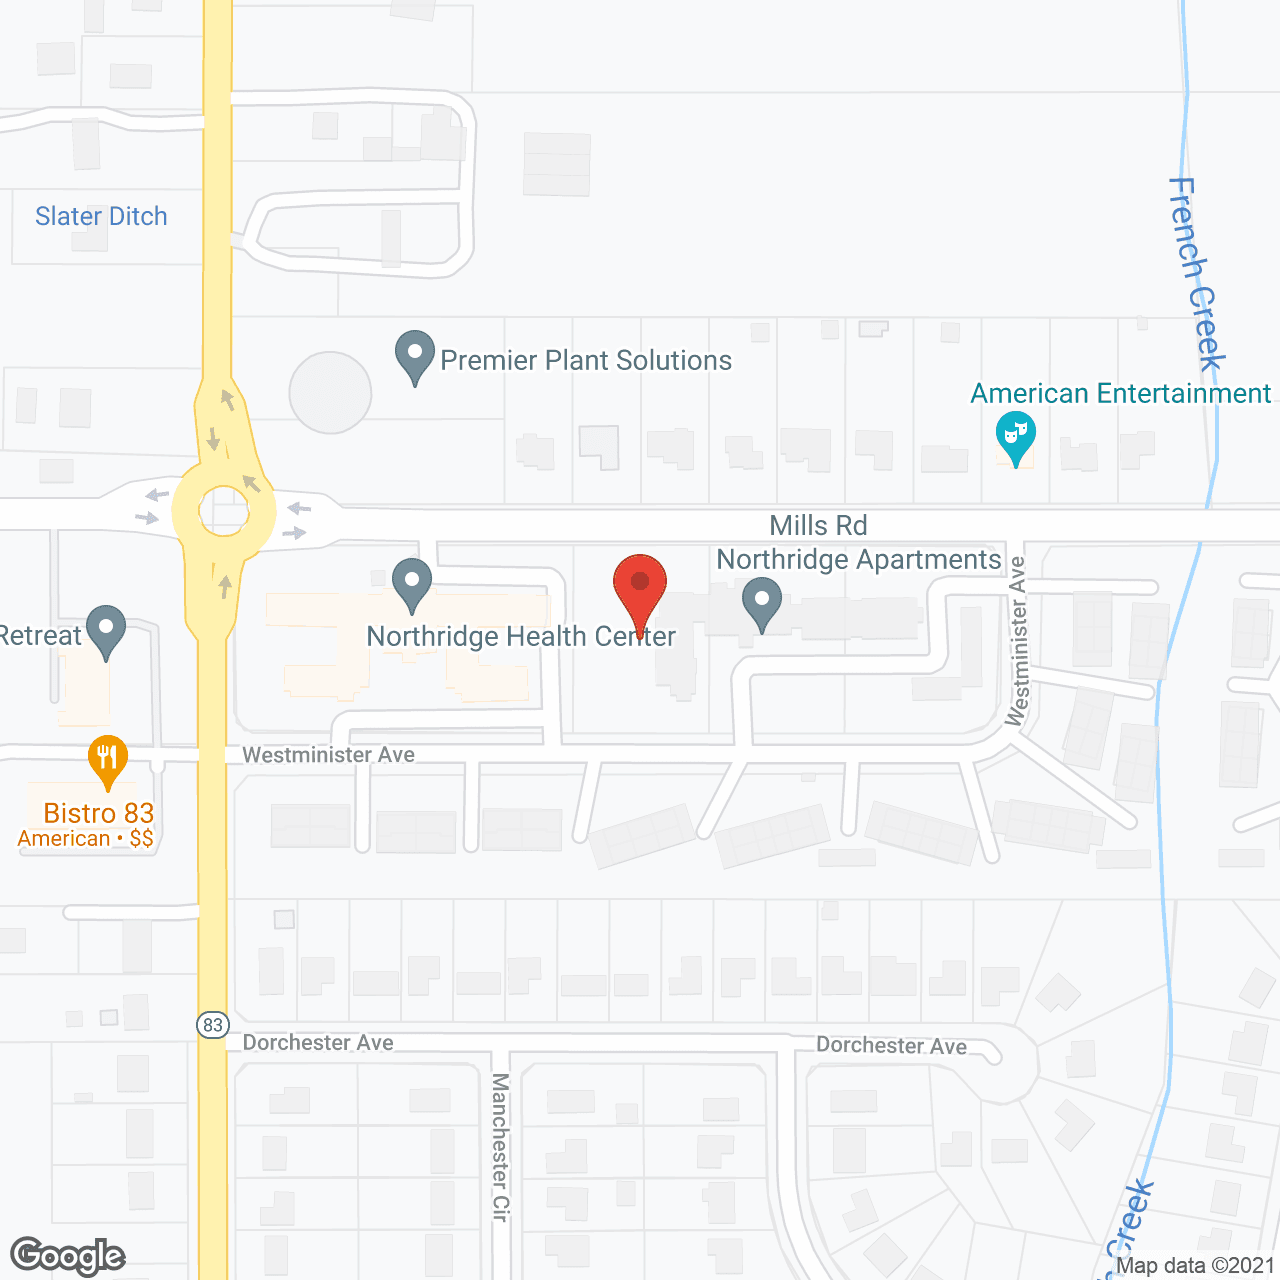 The Northridge Apartments in google map